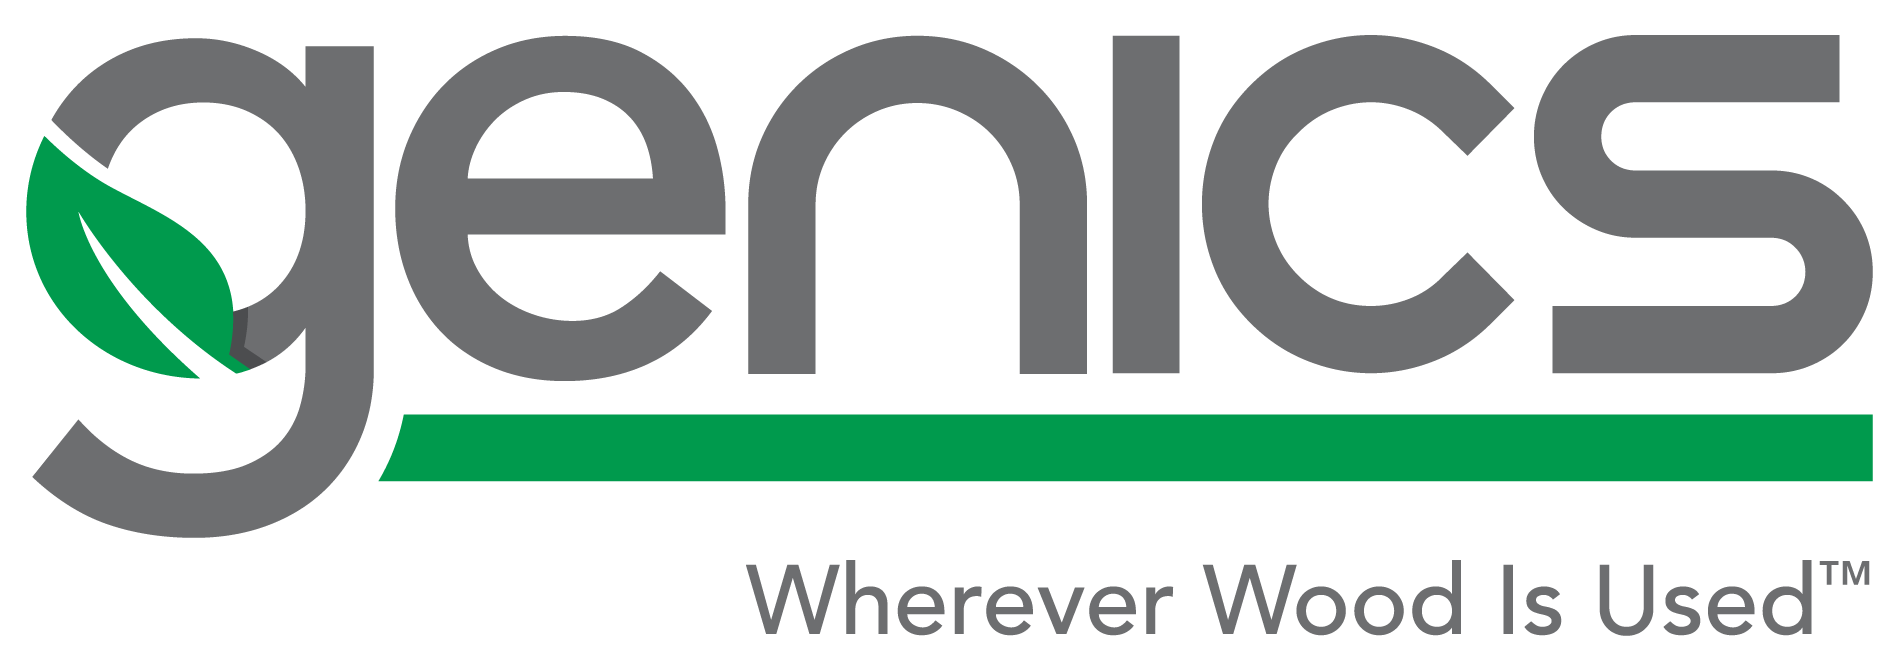 genics logo